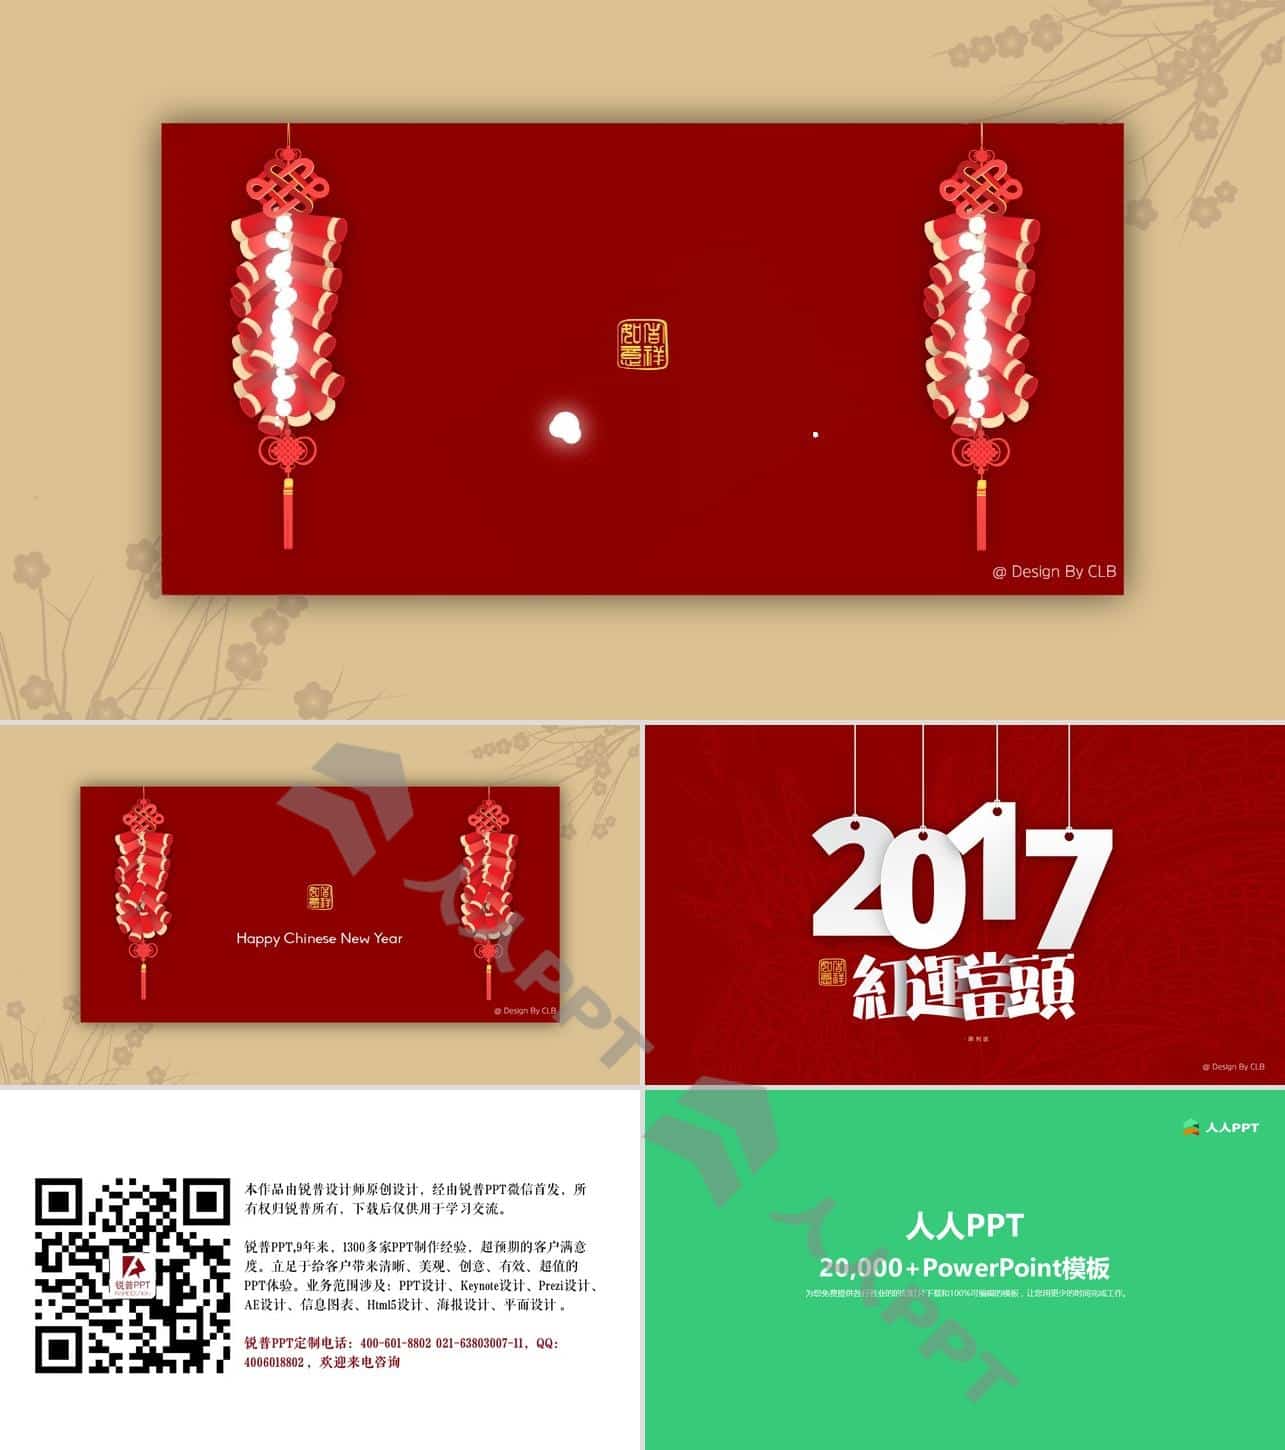 Happy Chinese New Year――红运当头新年祝福动态贺卡PPT模板长图